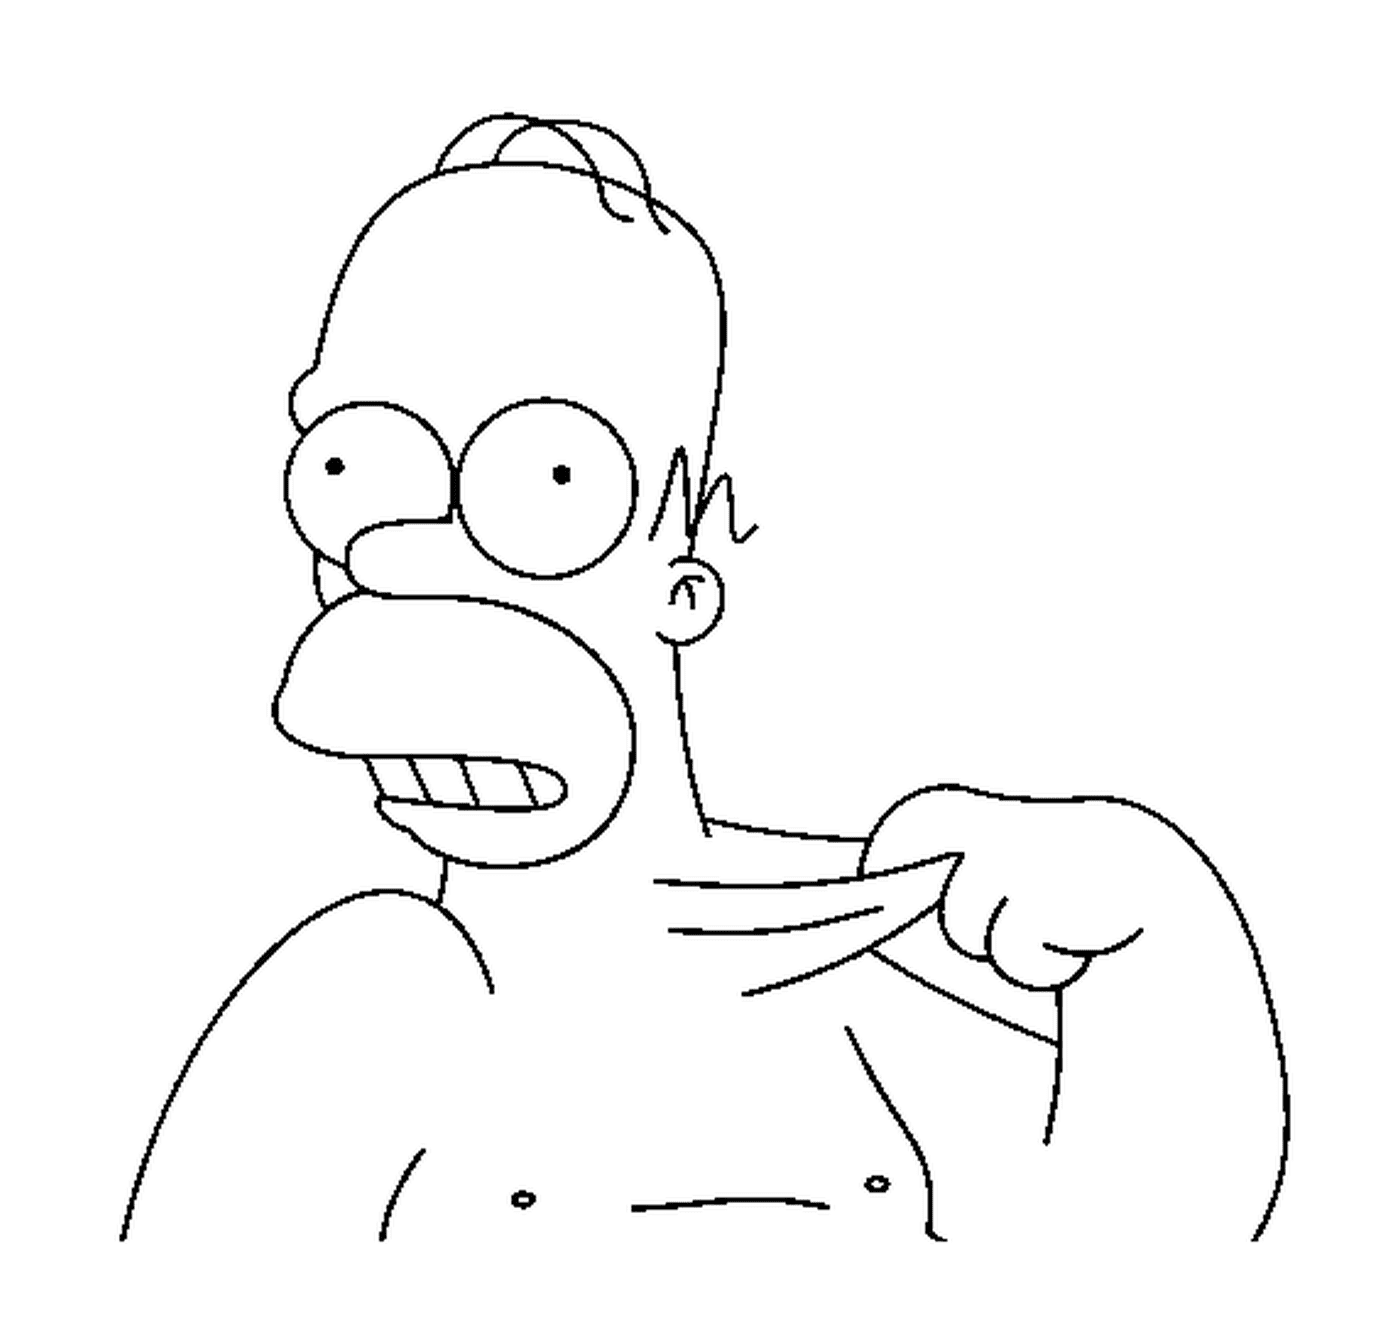  Homer Simpson con pelle elastica 